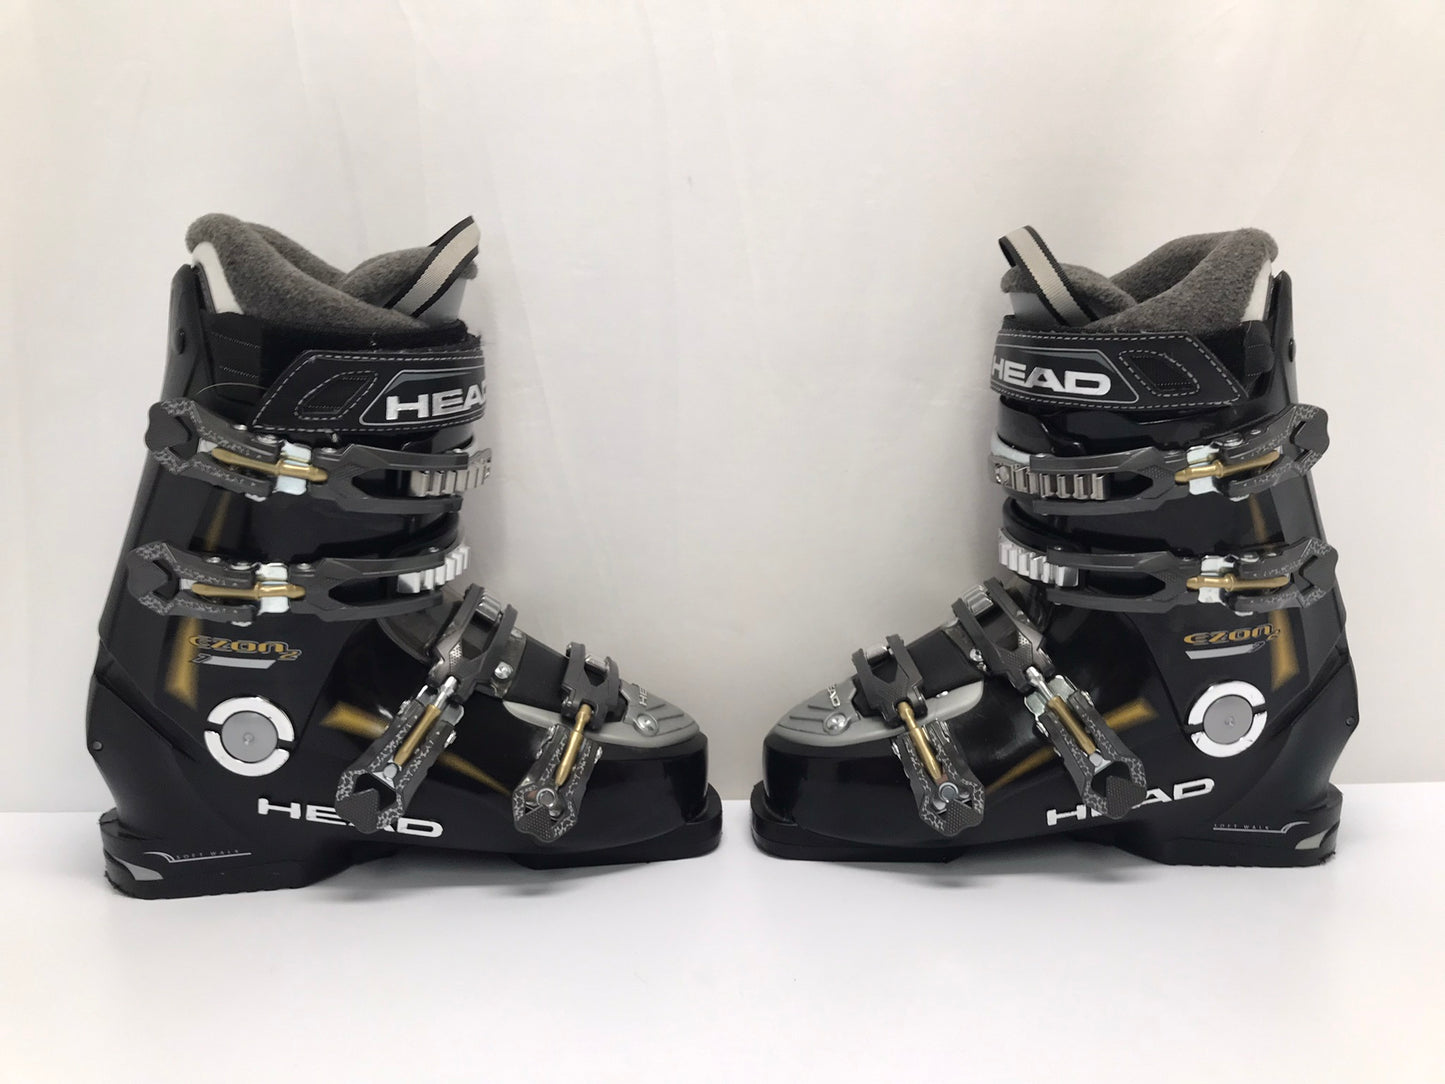 Ski Boots Mondo Size 25.5 Men's Size 7 Ladies Size 8 301 mm Head Soft Walk Black Gold New Demo Model